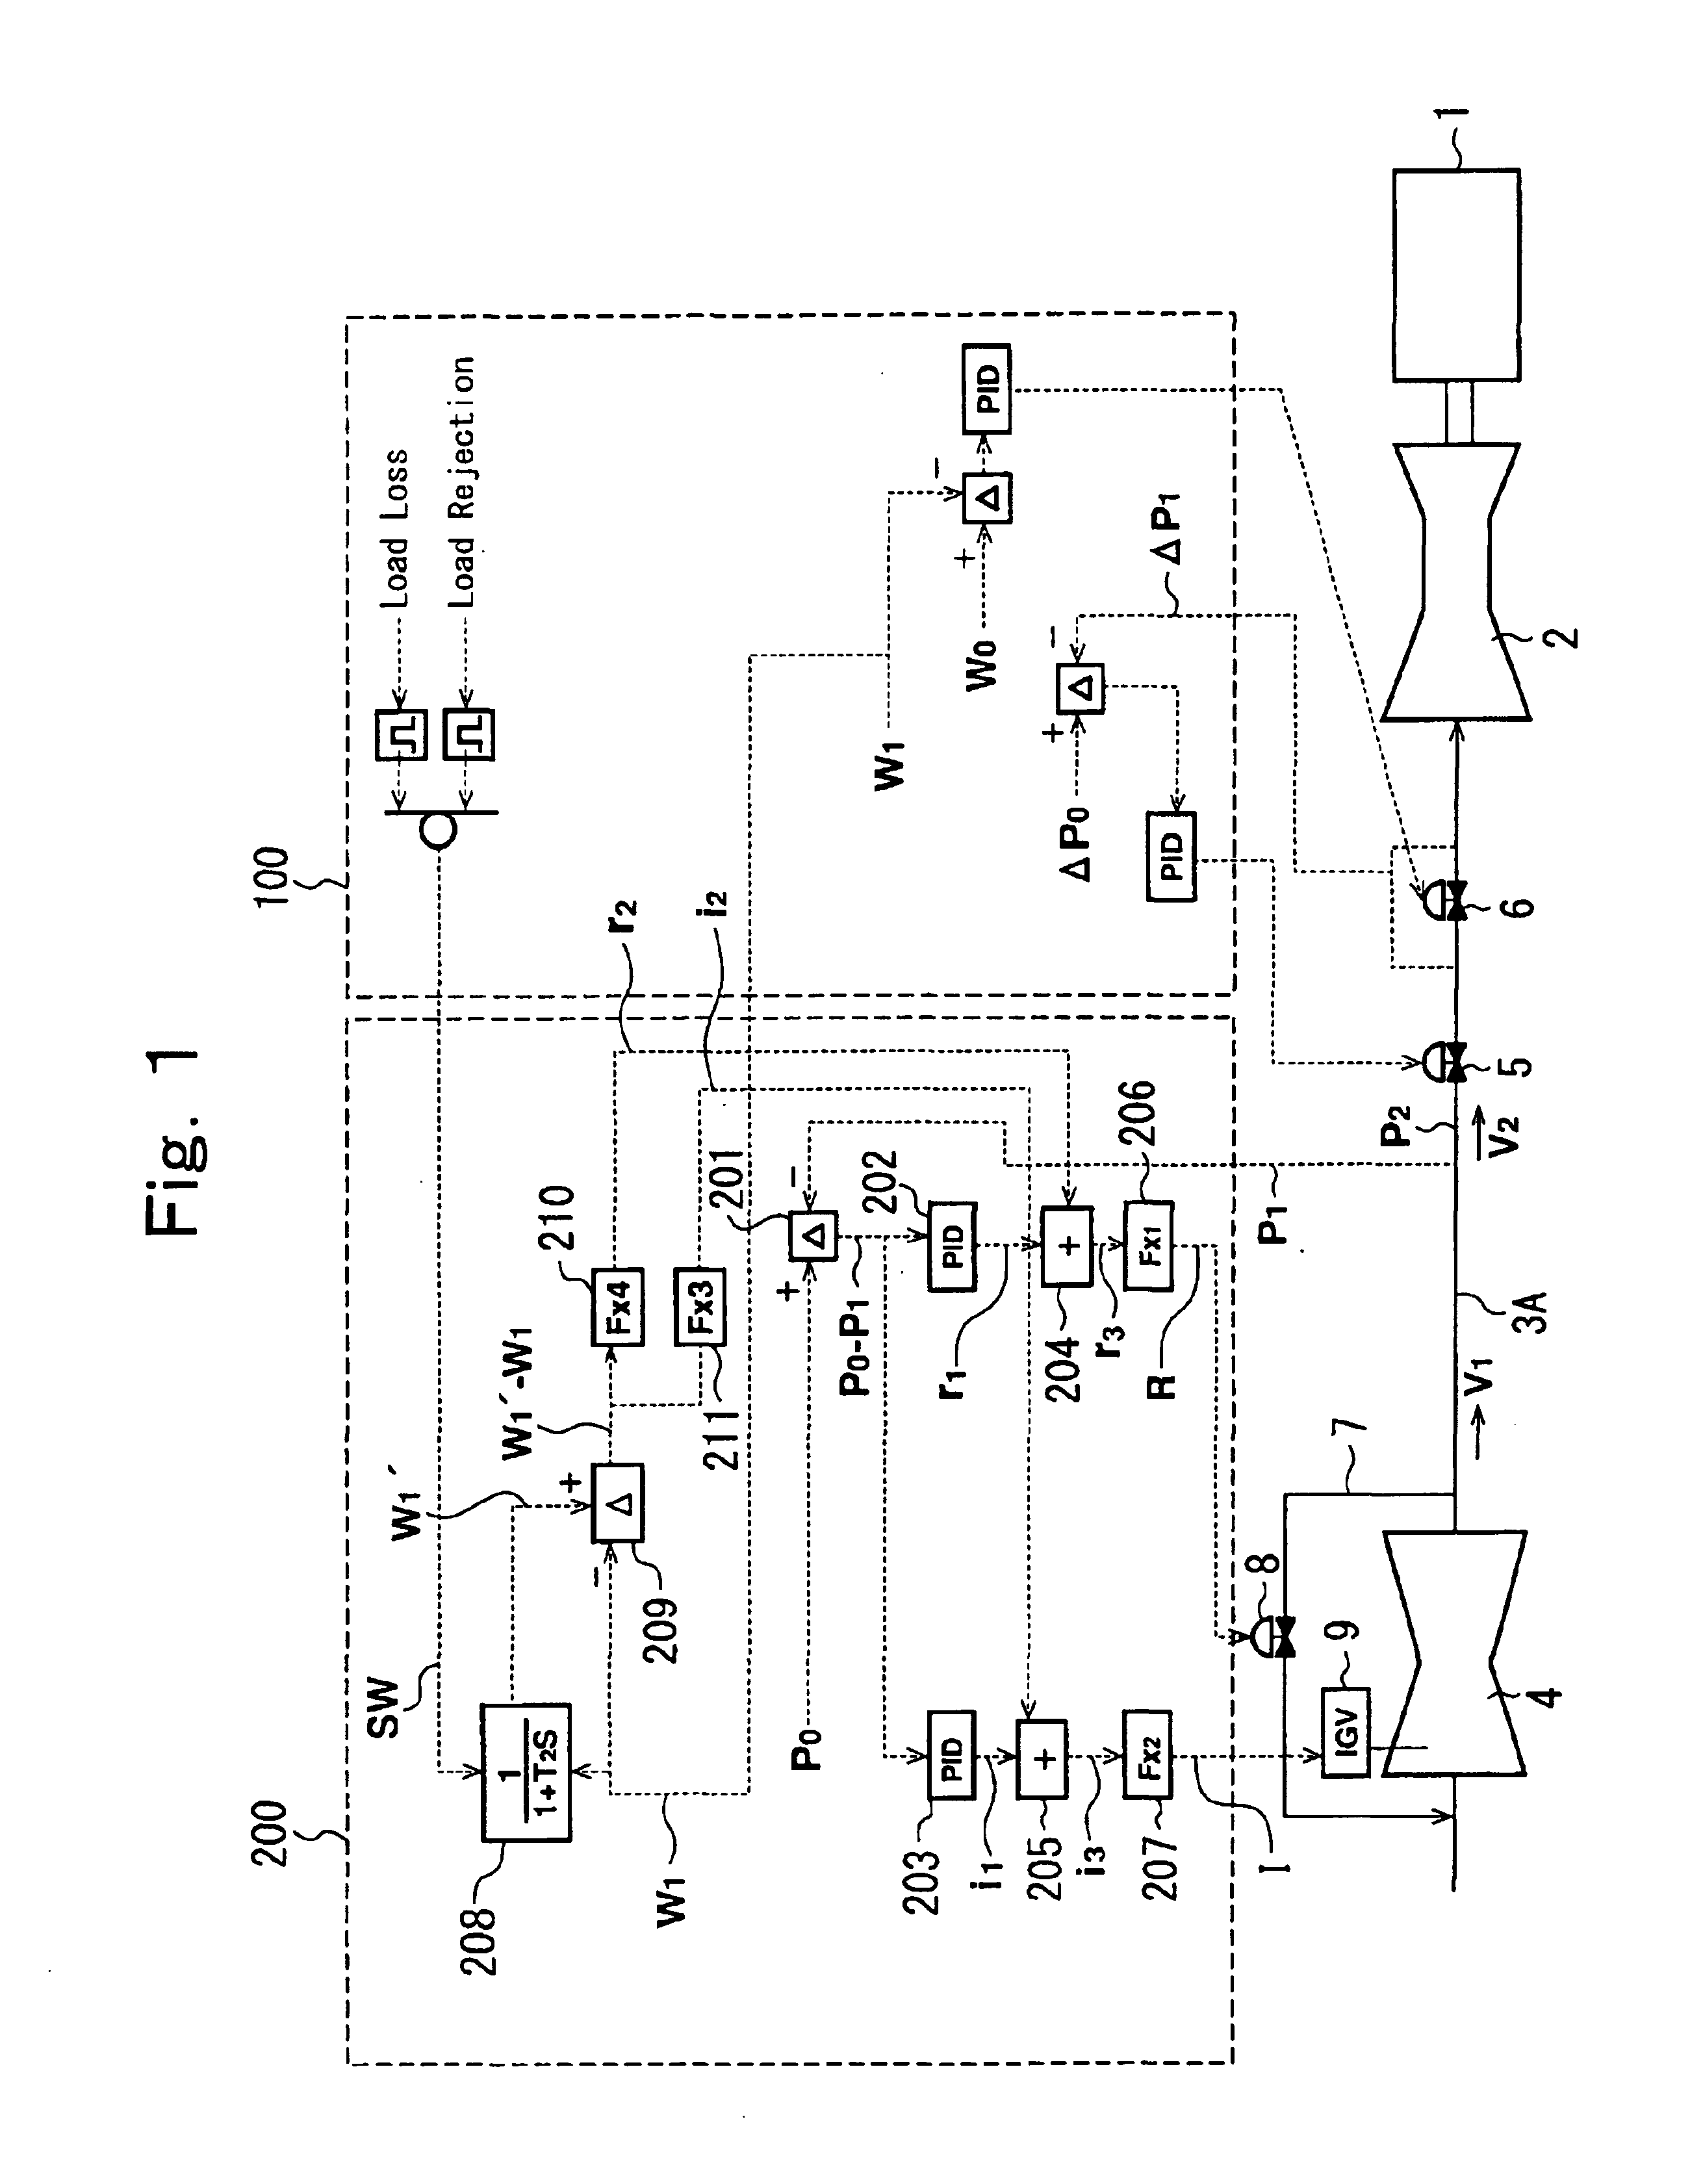 Gas compressor control device and gas turbine plant control mechanism